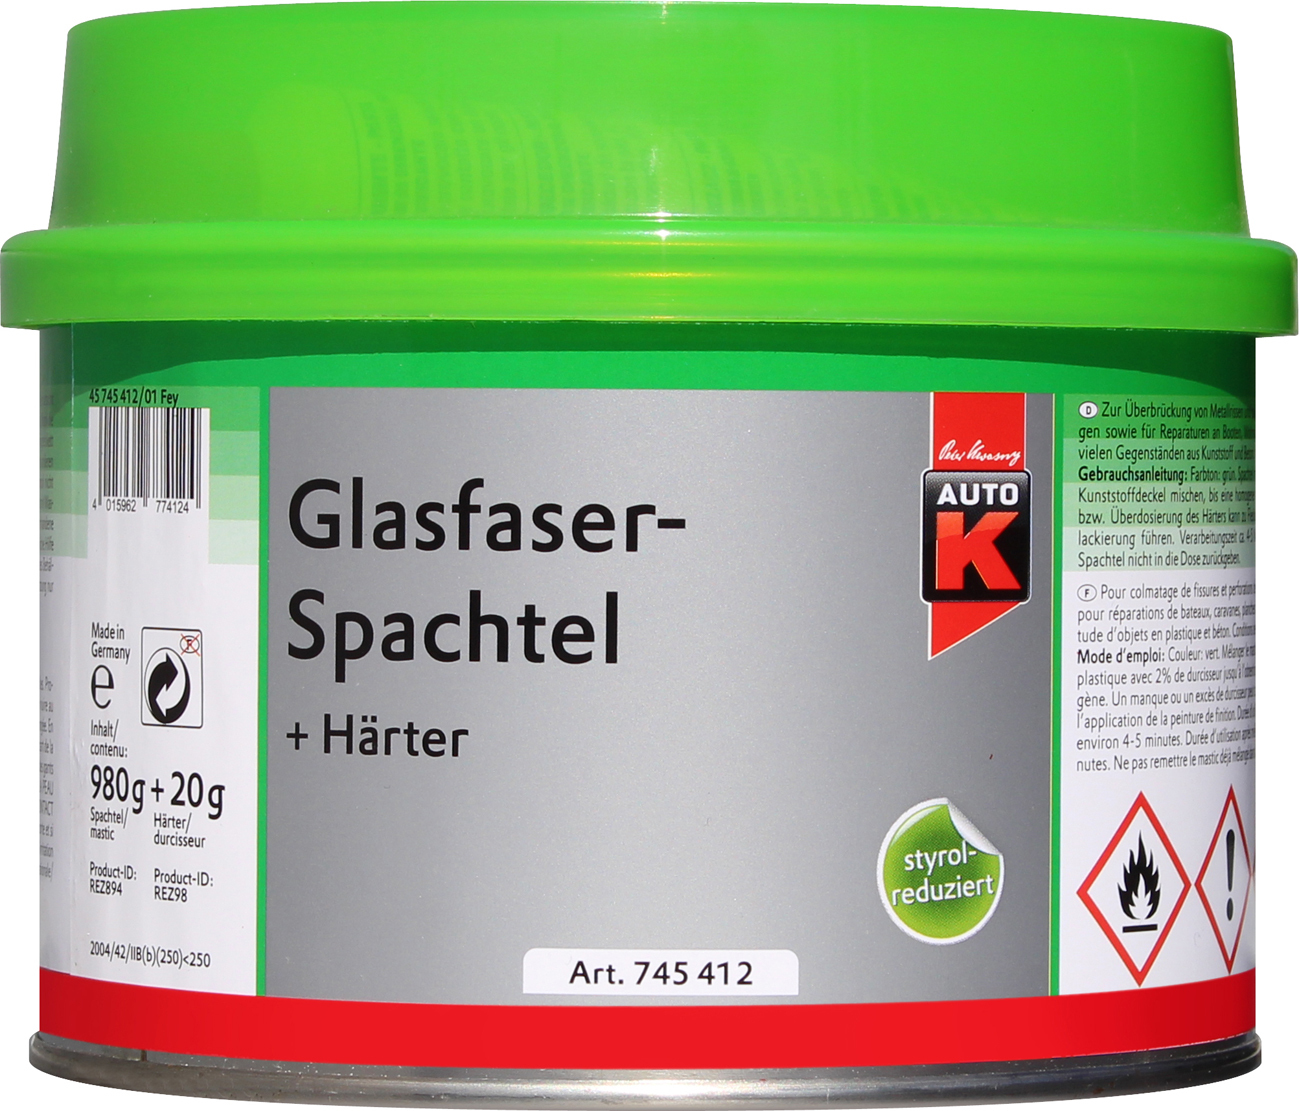 Peter Kwasny GmbH Auto-K GLASFASERSPACHTEL 1000G